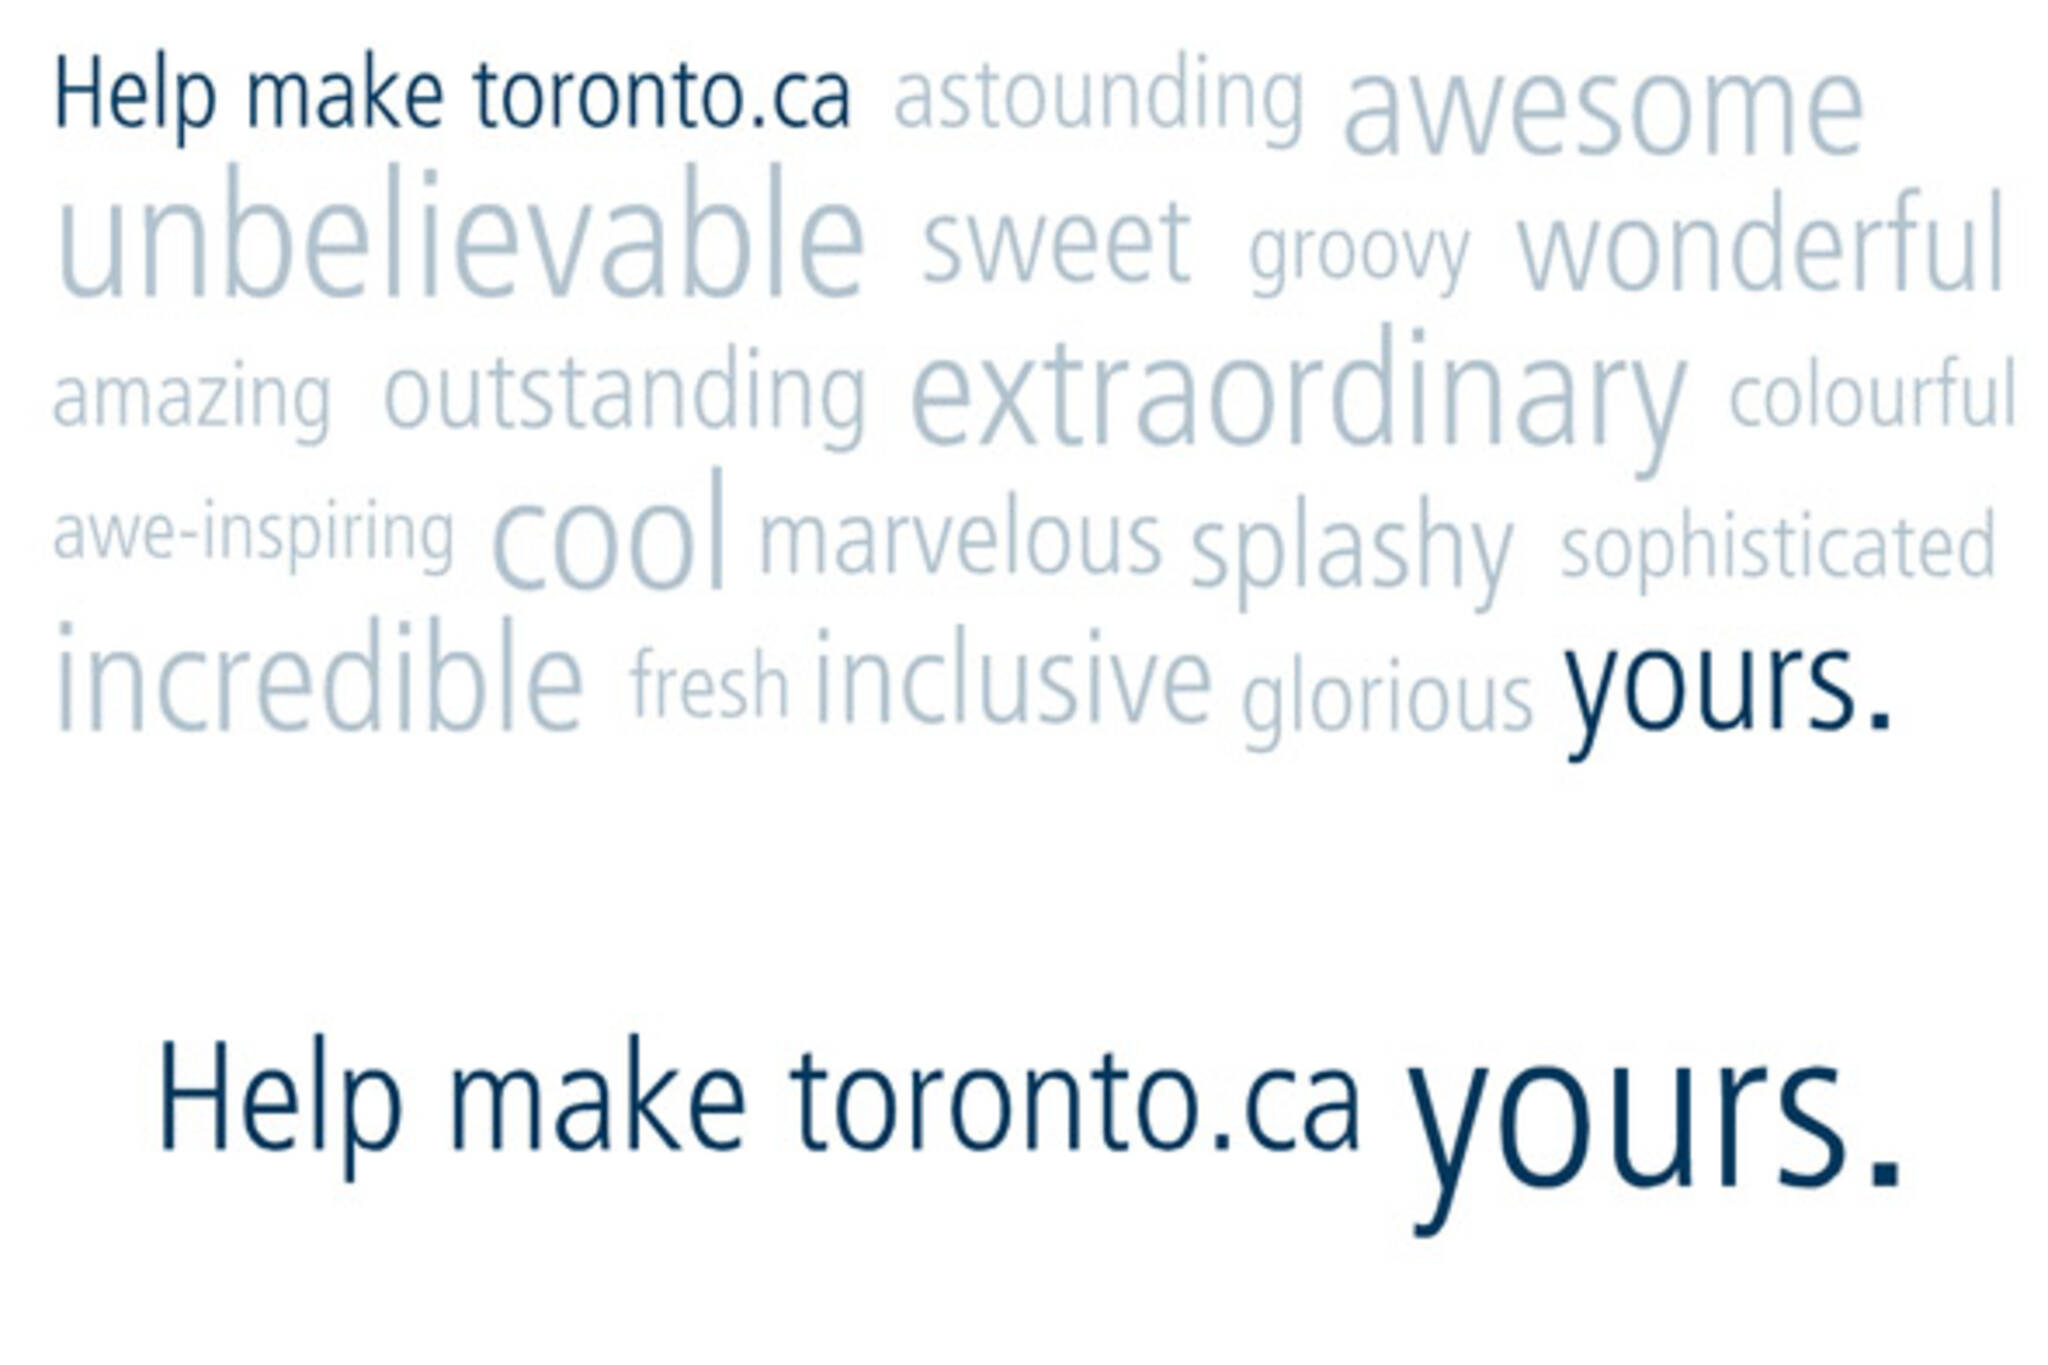 The Toronto.ca rebrand.